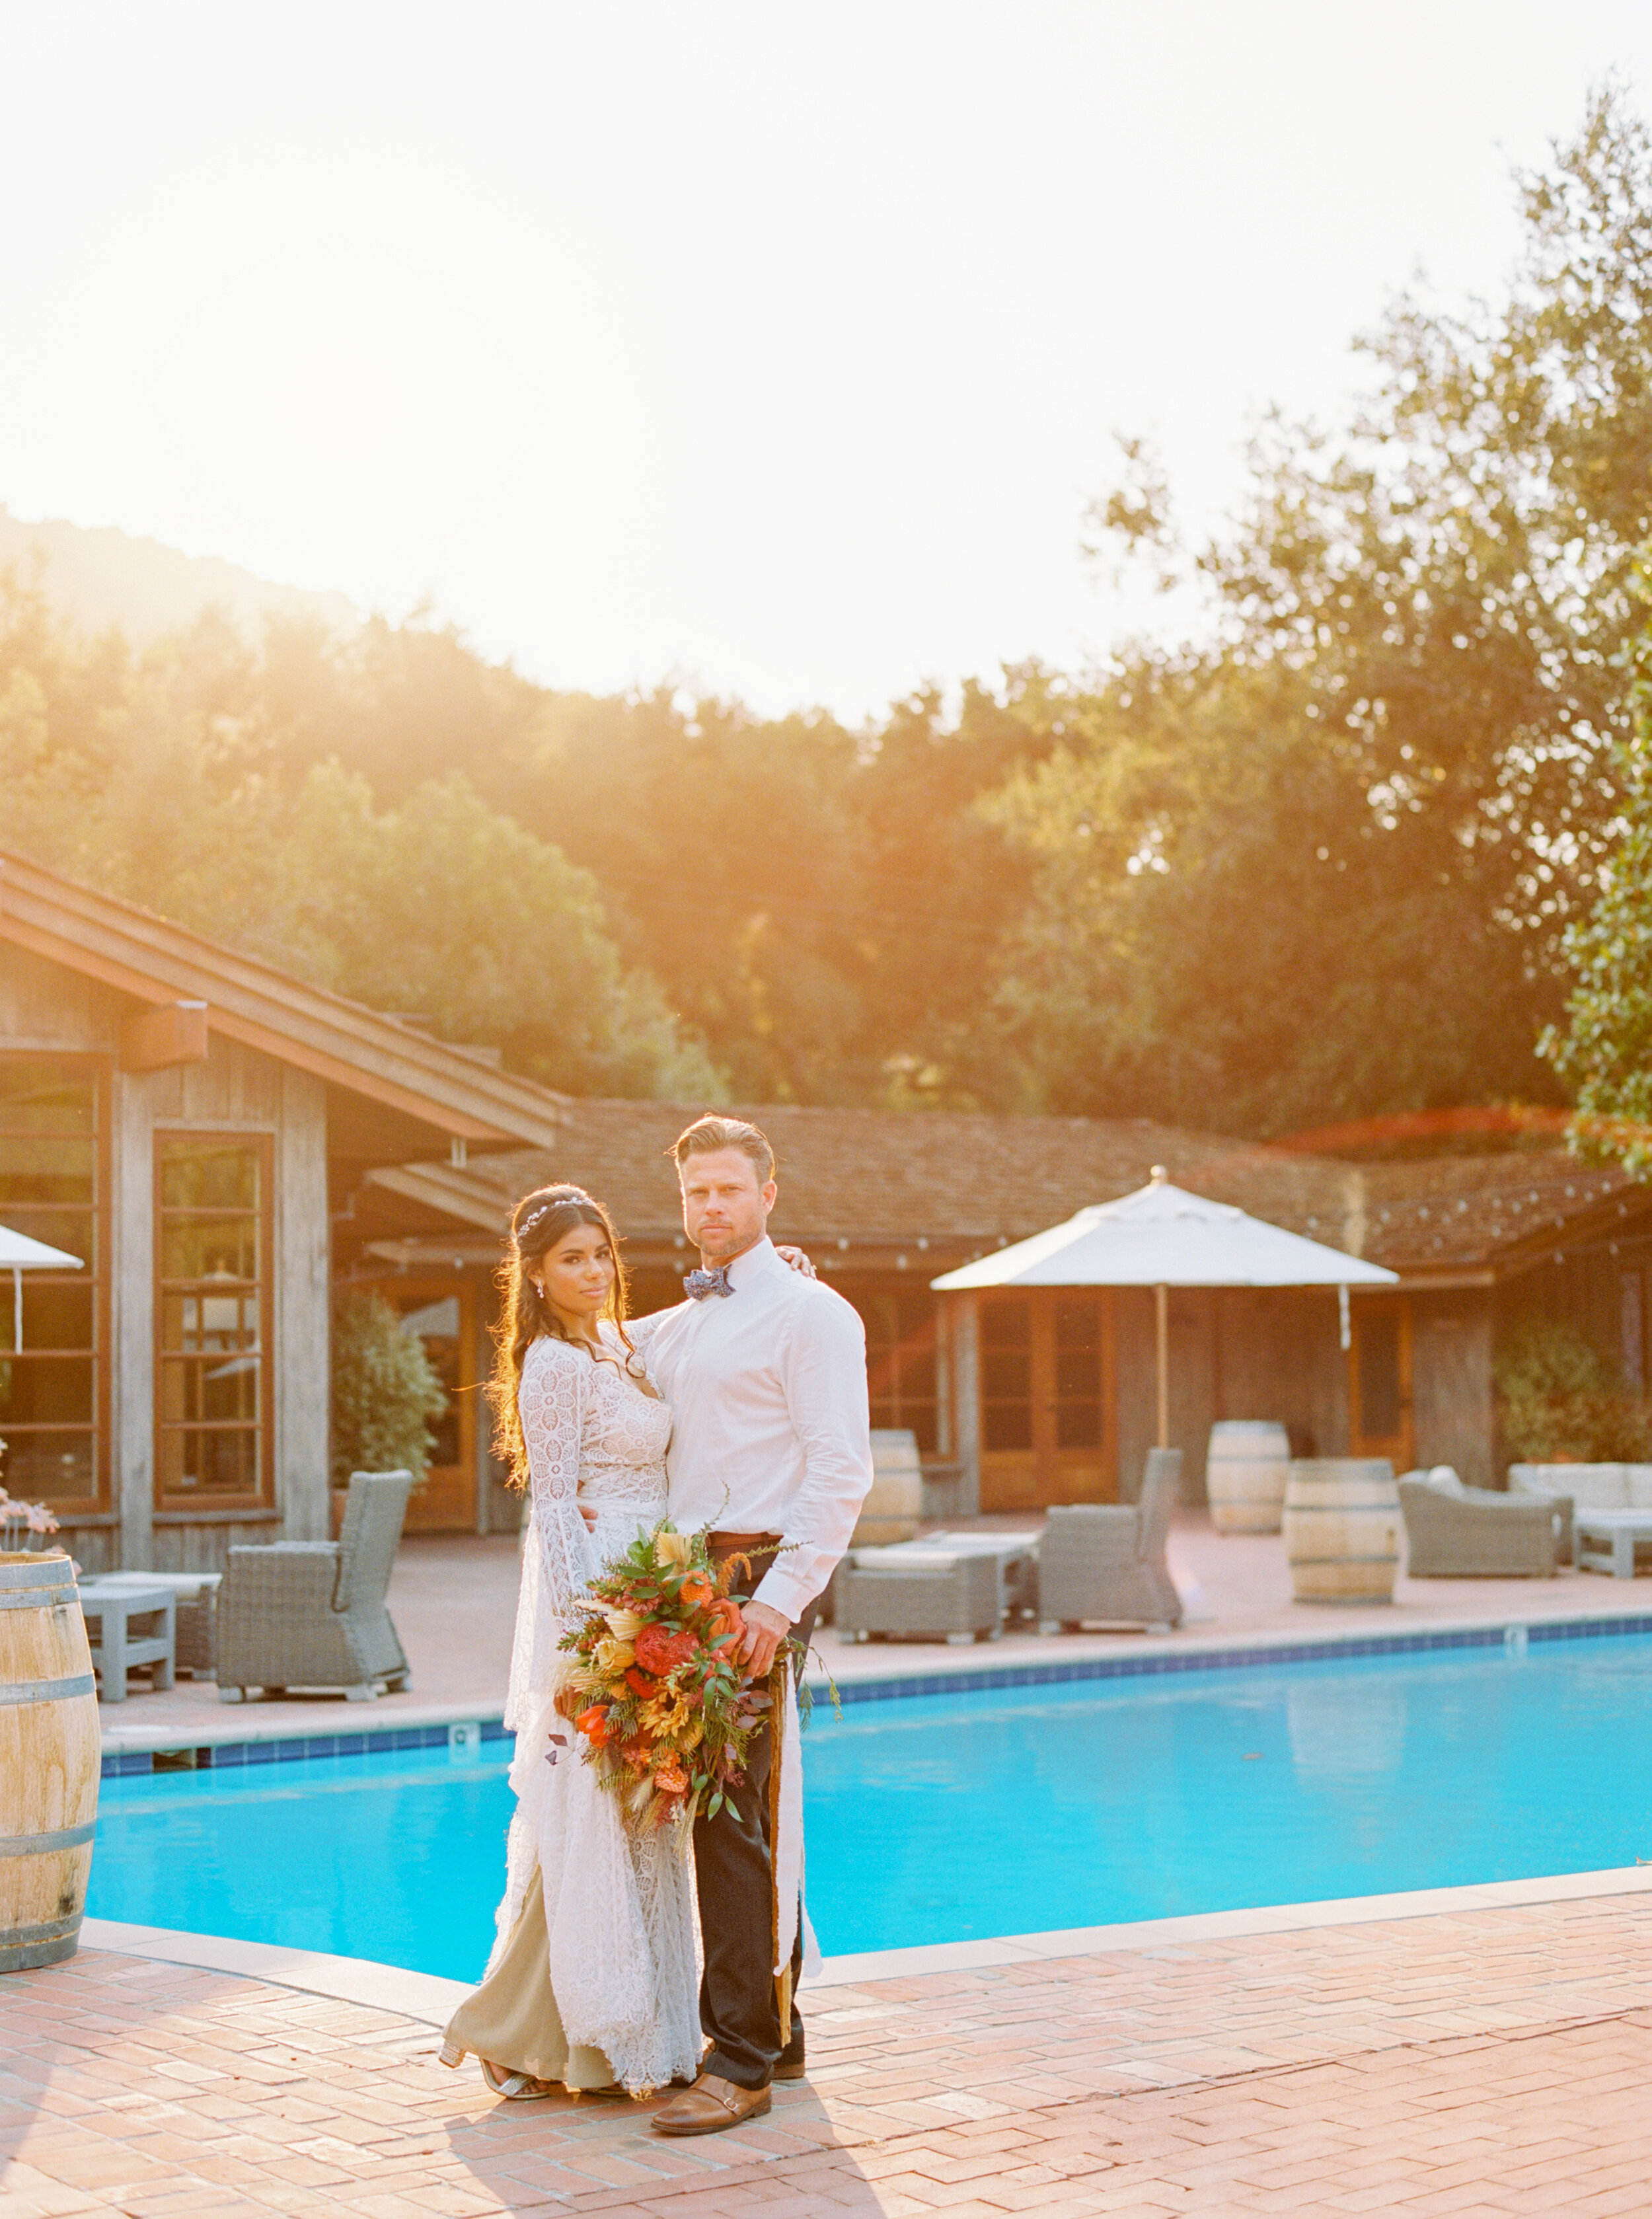 Sarahi Hadden - An Earthy Summer Boho Inspired Wedding with Sunset Hues at Gardener Ranch-7.jpg